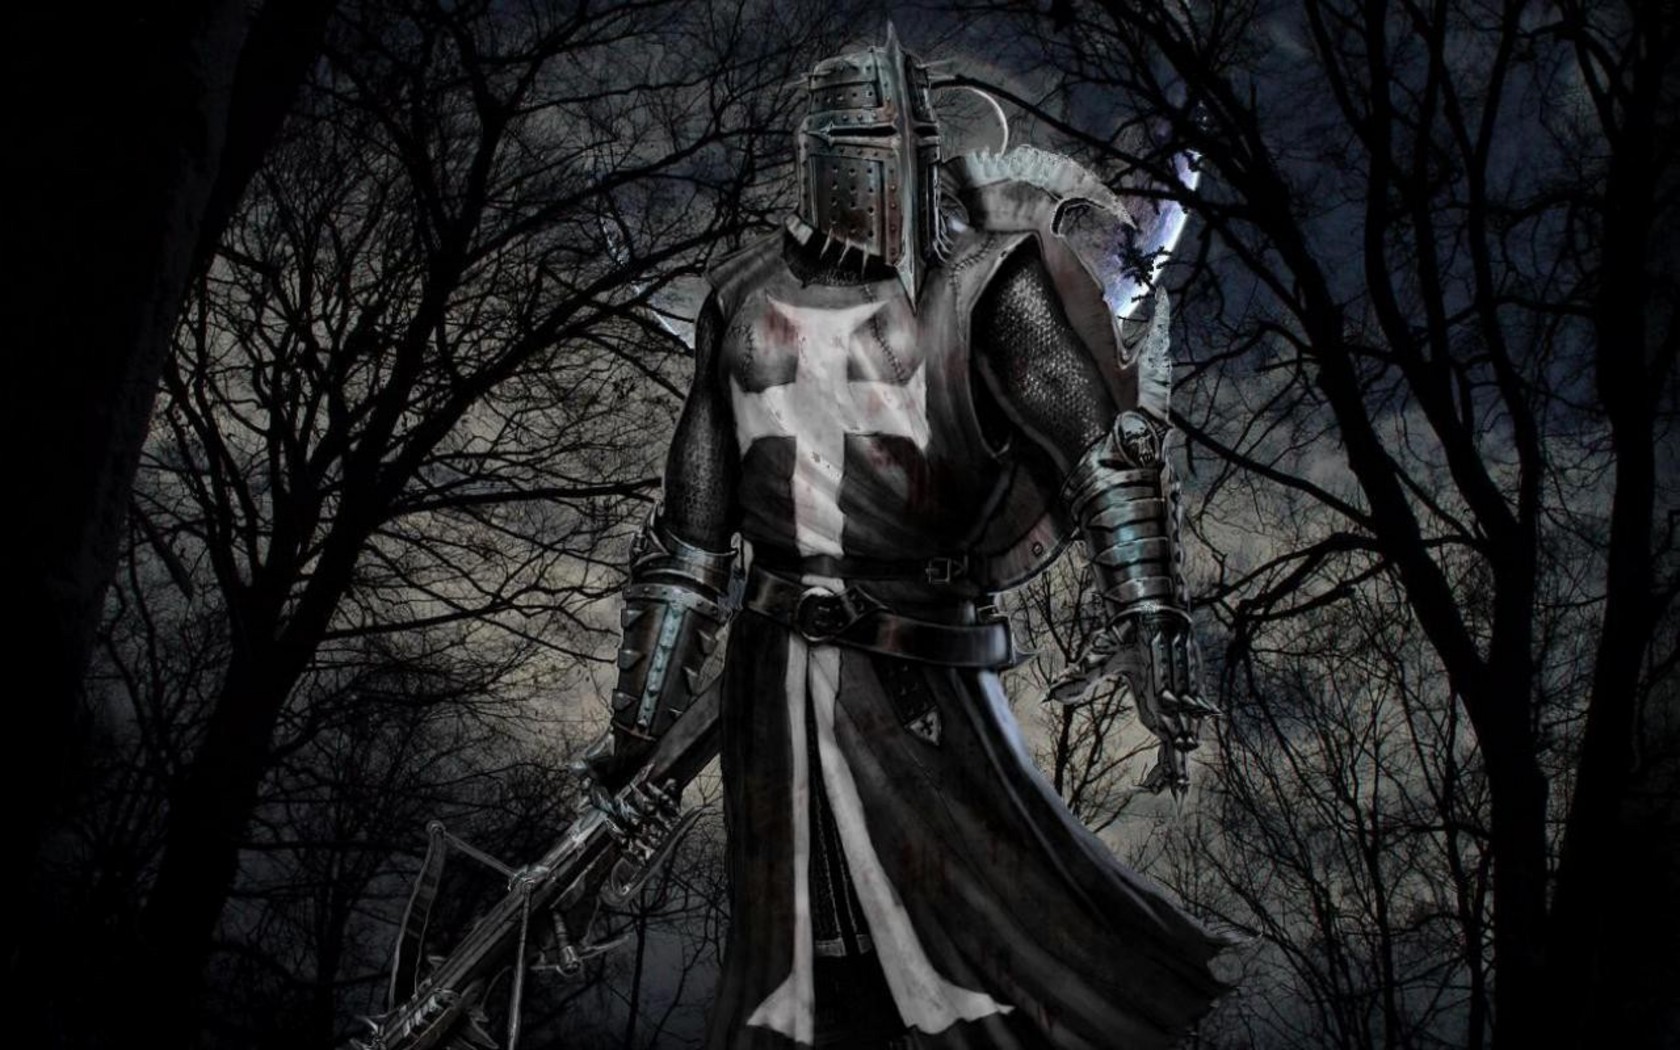 Knight Background